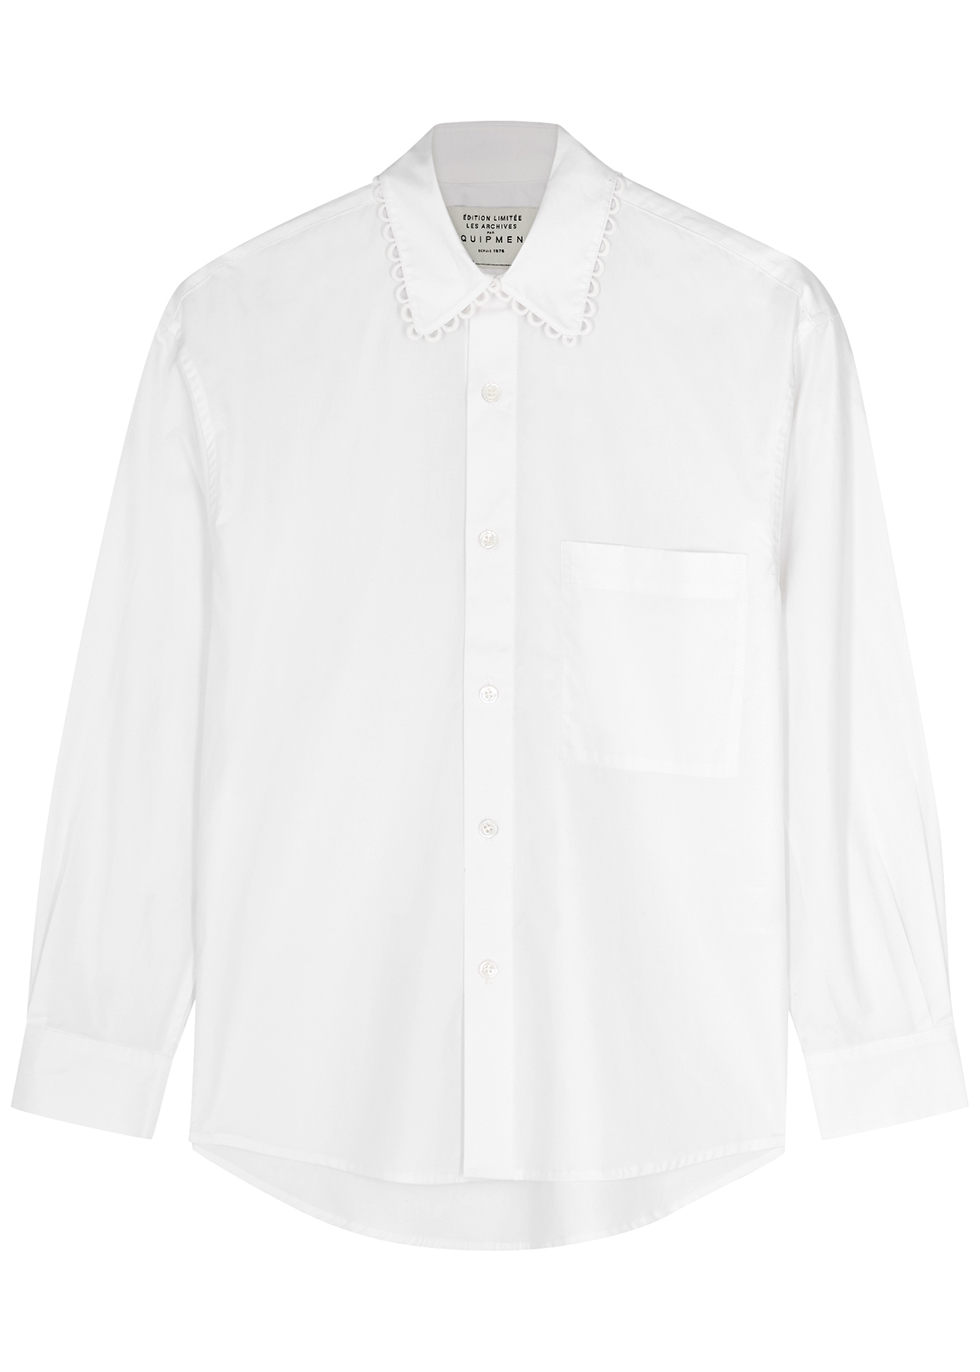 Equipment Archive white cotton-poplin shirt - Harvey Nichols